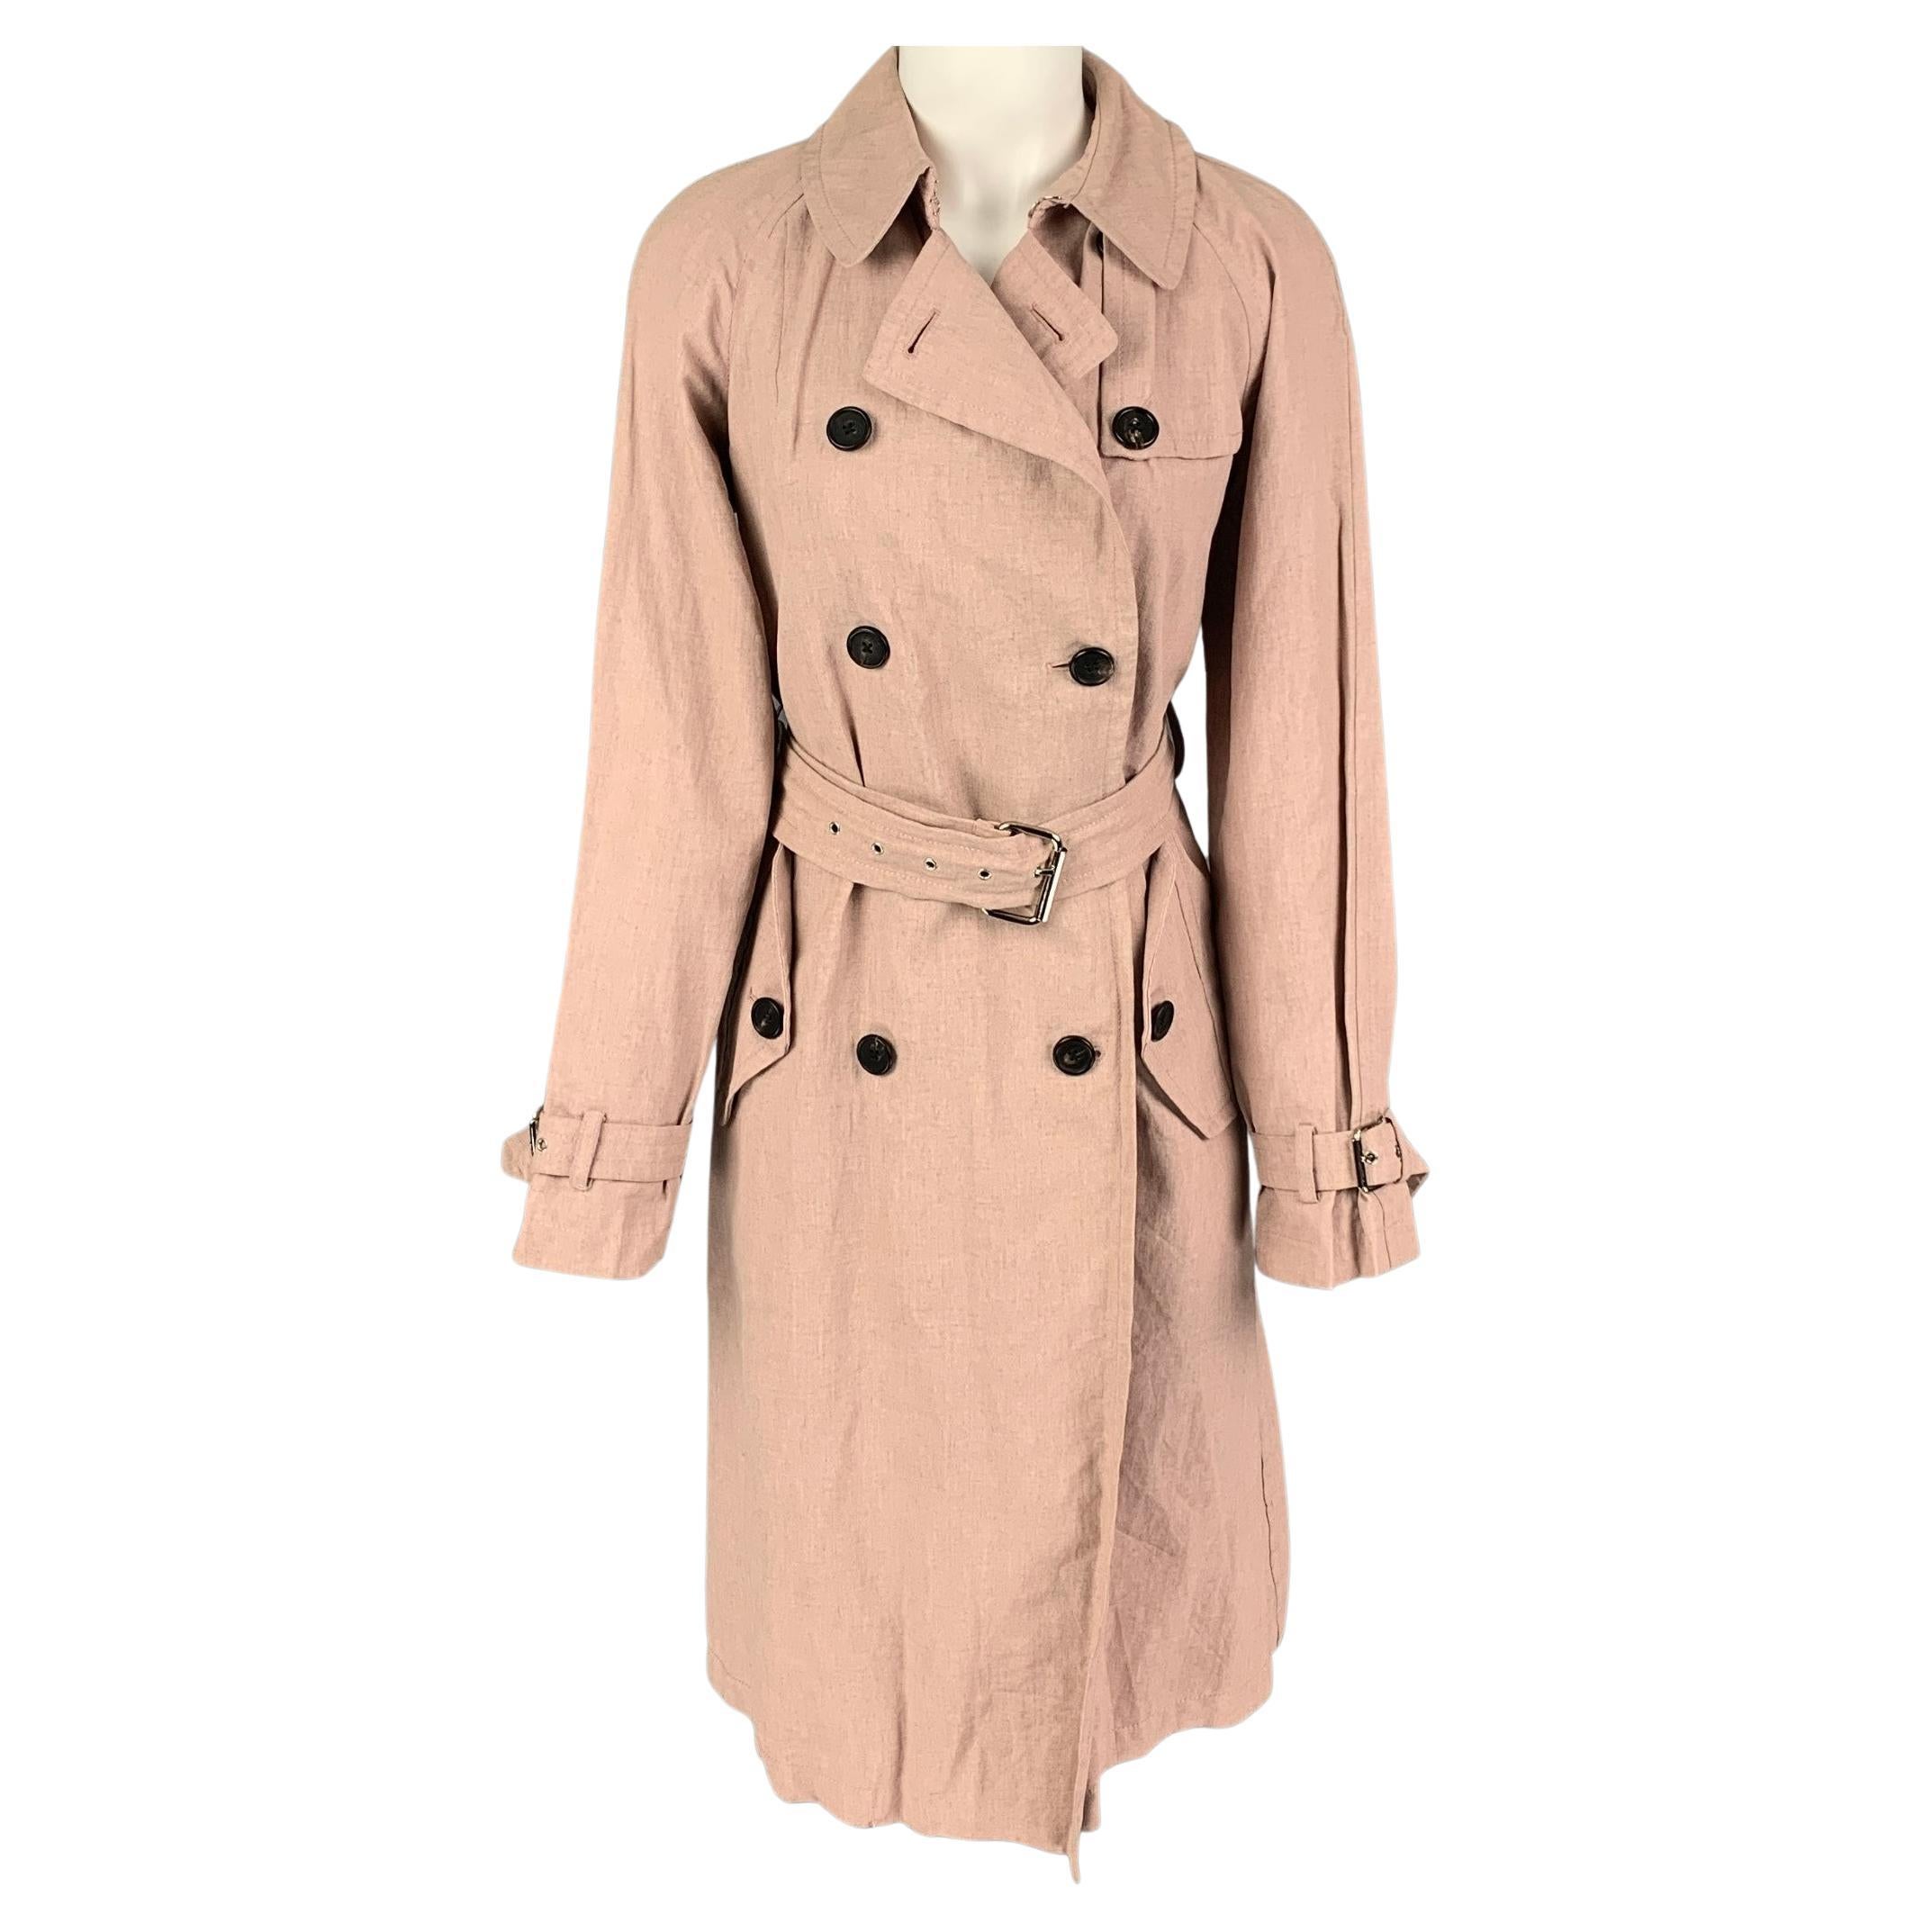 MARC JACOBS Size 2 Pink Linen Blend Wrinkled Belted Trench Coat